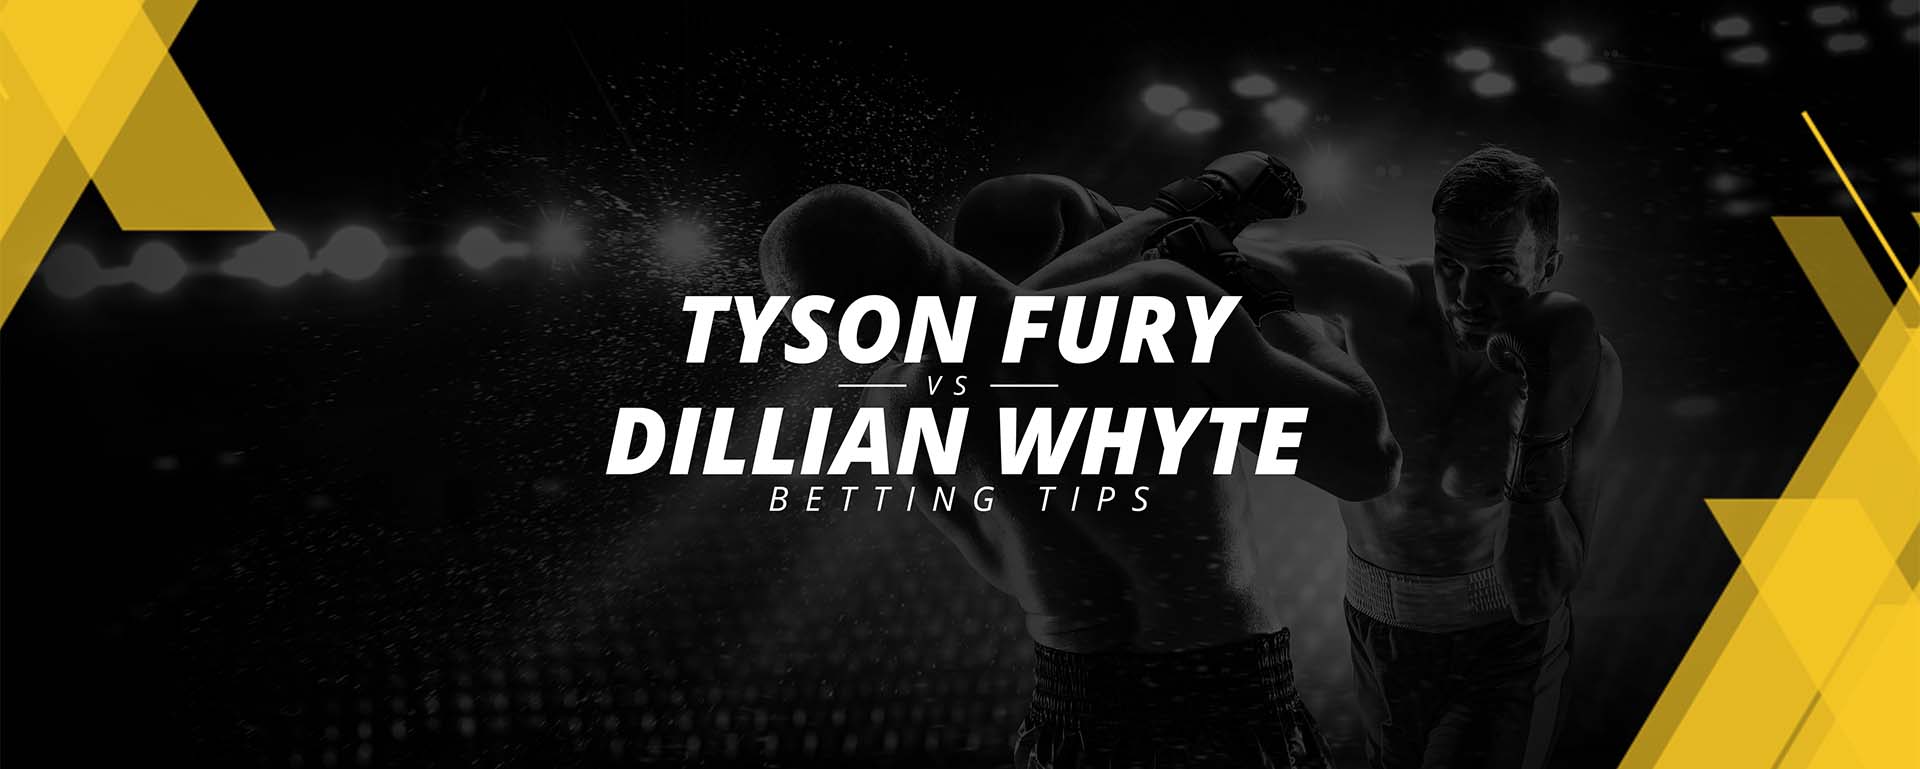 TYSON FURY VS DILLIAN WHYTE: BETTING TIPS